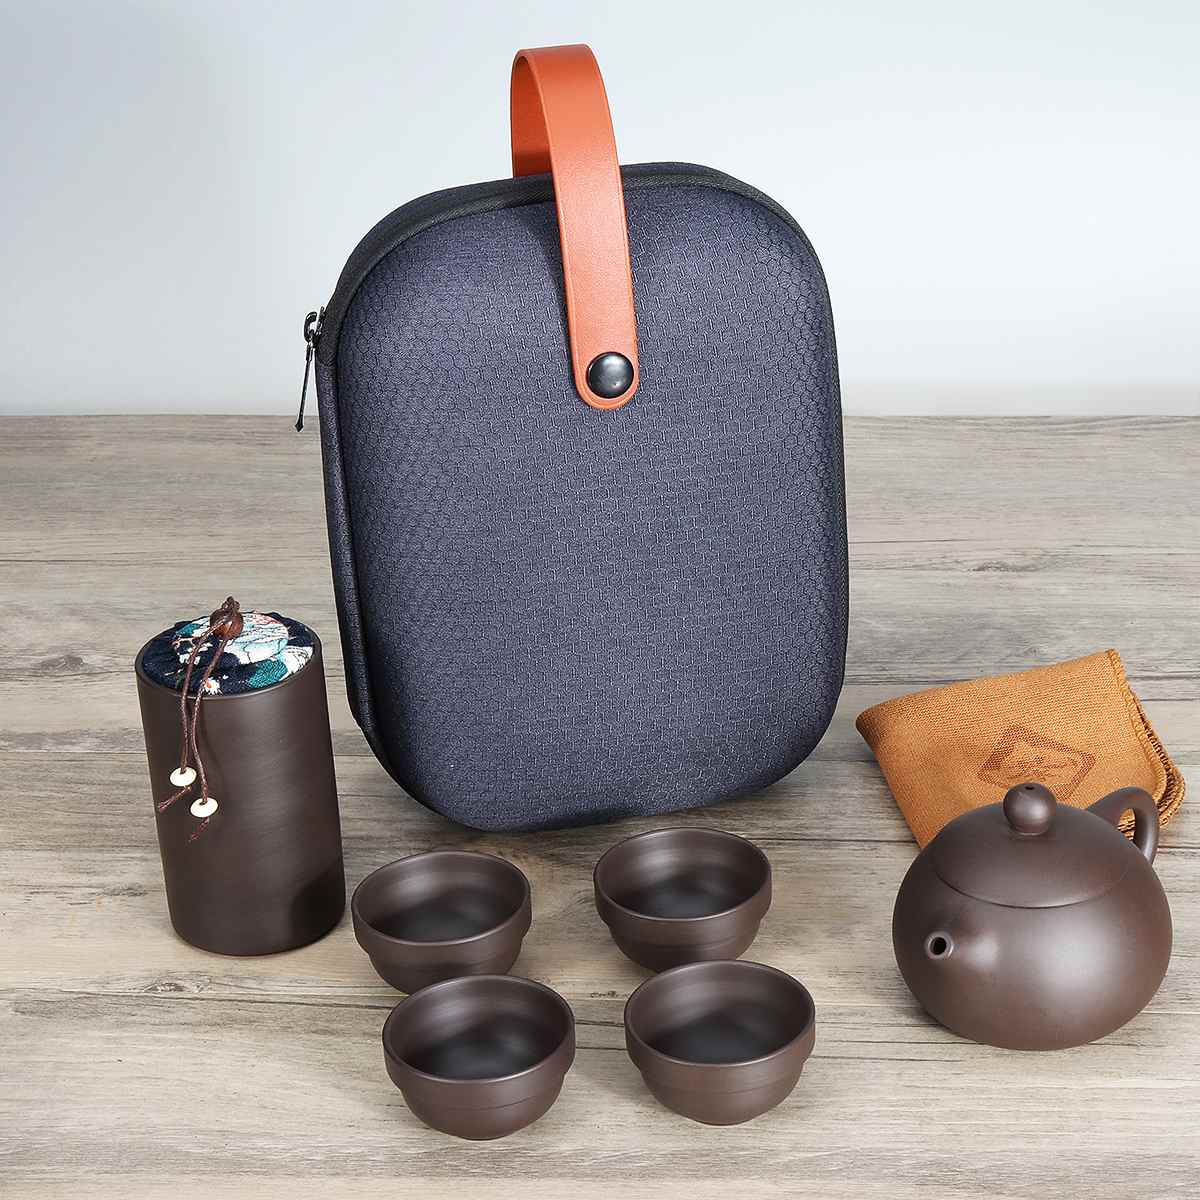 Teaware Sets Portable Teapot Tea Set Gift Chinese Purple Sand Tea Pot + 4 Cups + 1 Storage Bag Travel Drinkware Kitchen Tools